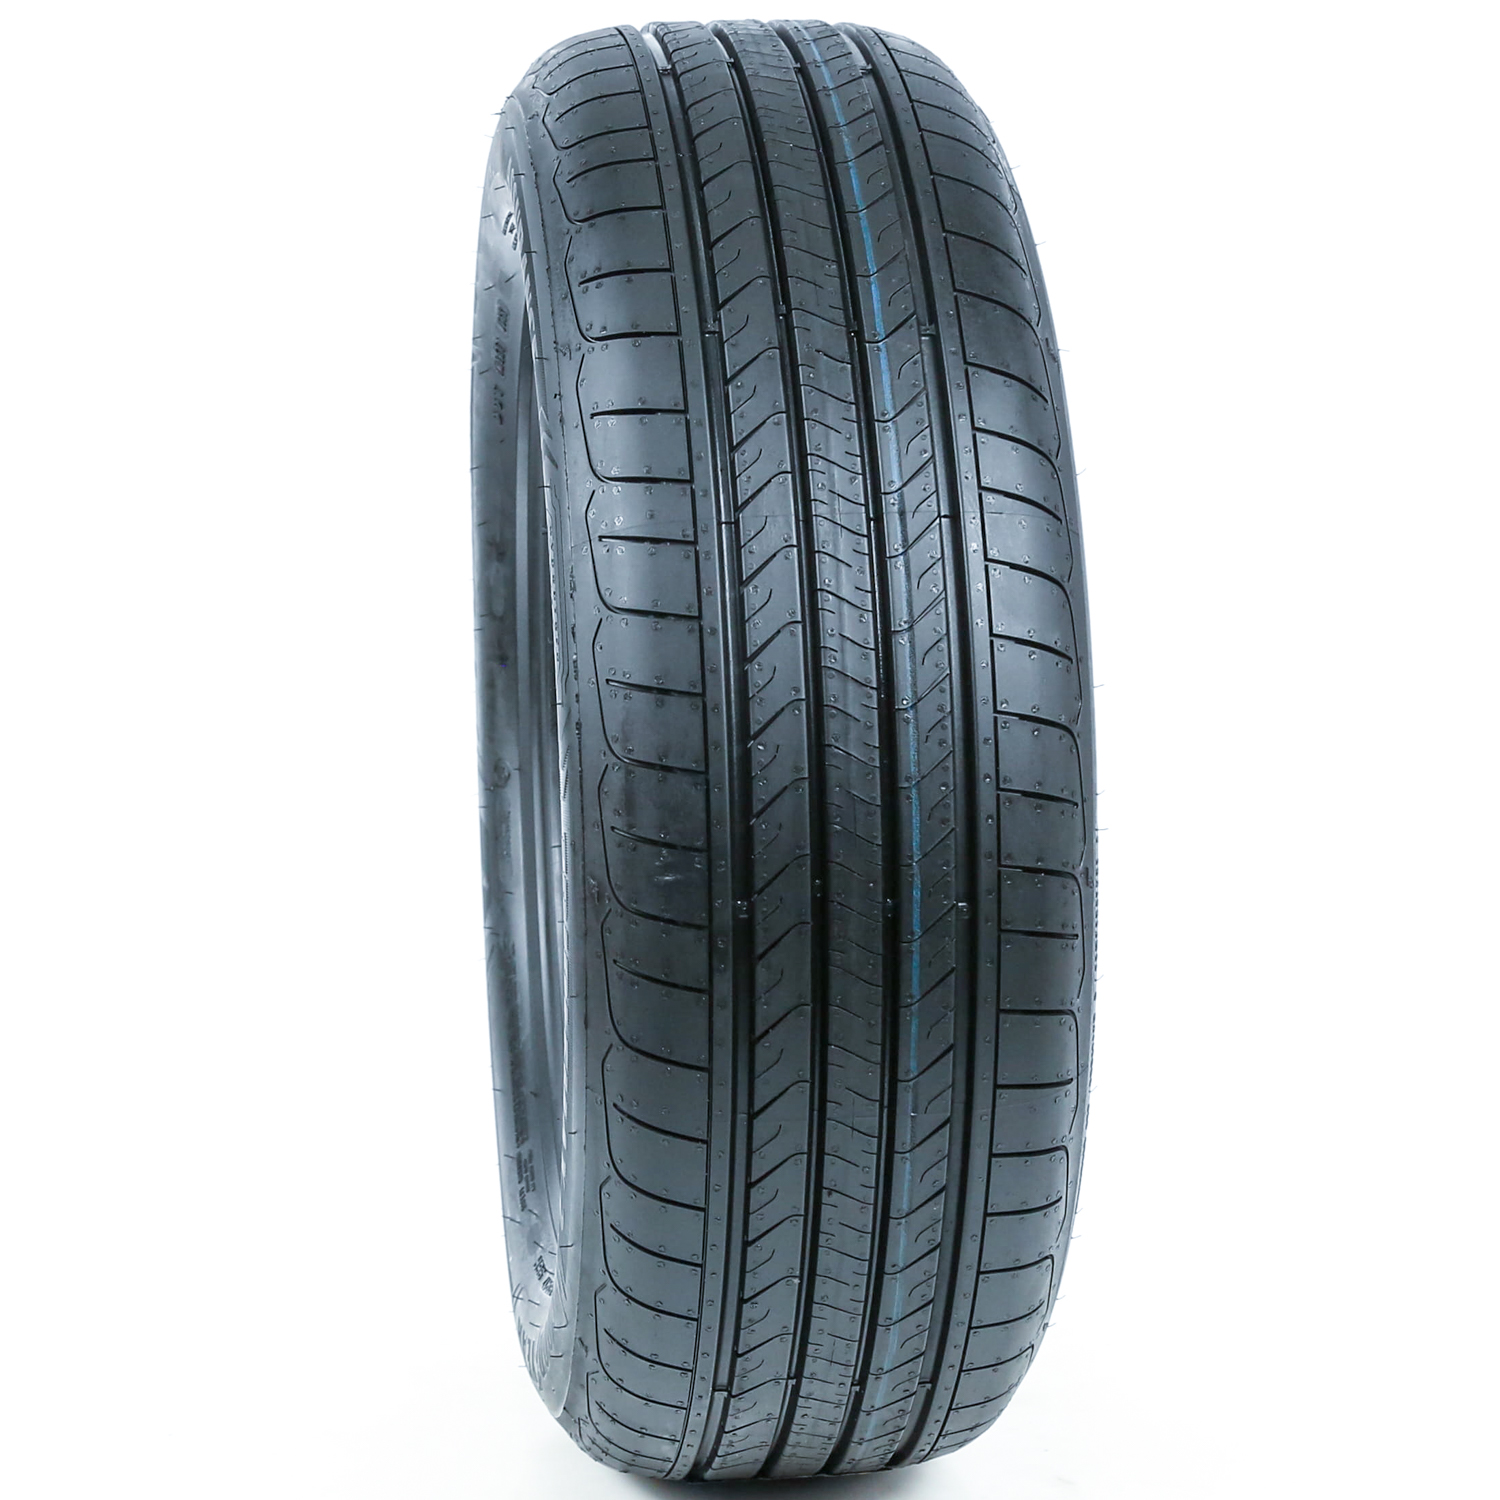  Goodyear Assurance Triplemax 215/60 R17 96H Tubeless Car Tyre :  Automotive